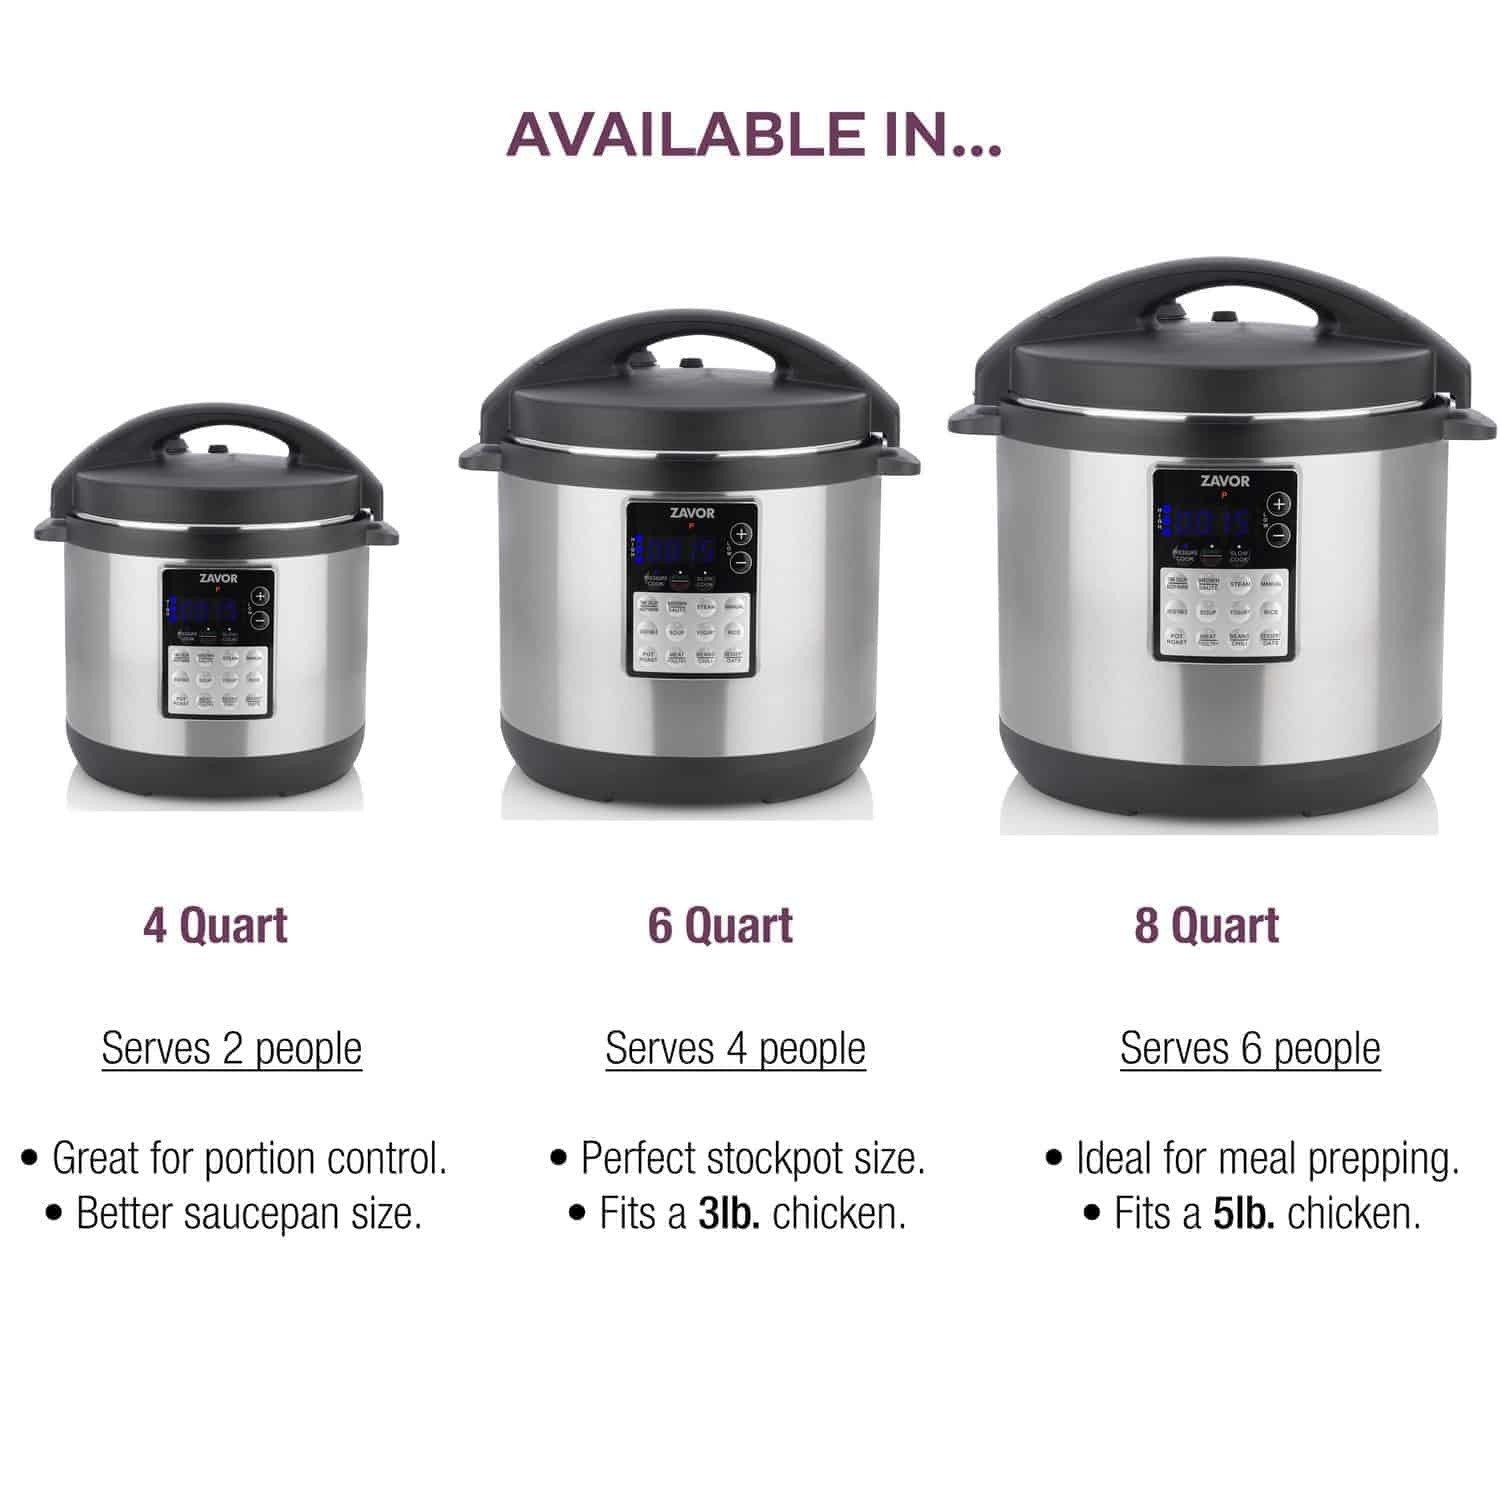 Cuisinart 6-Quart High Pressure Multicooker 